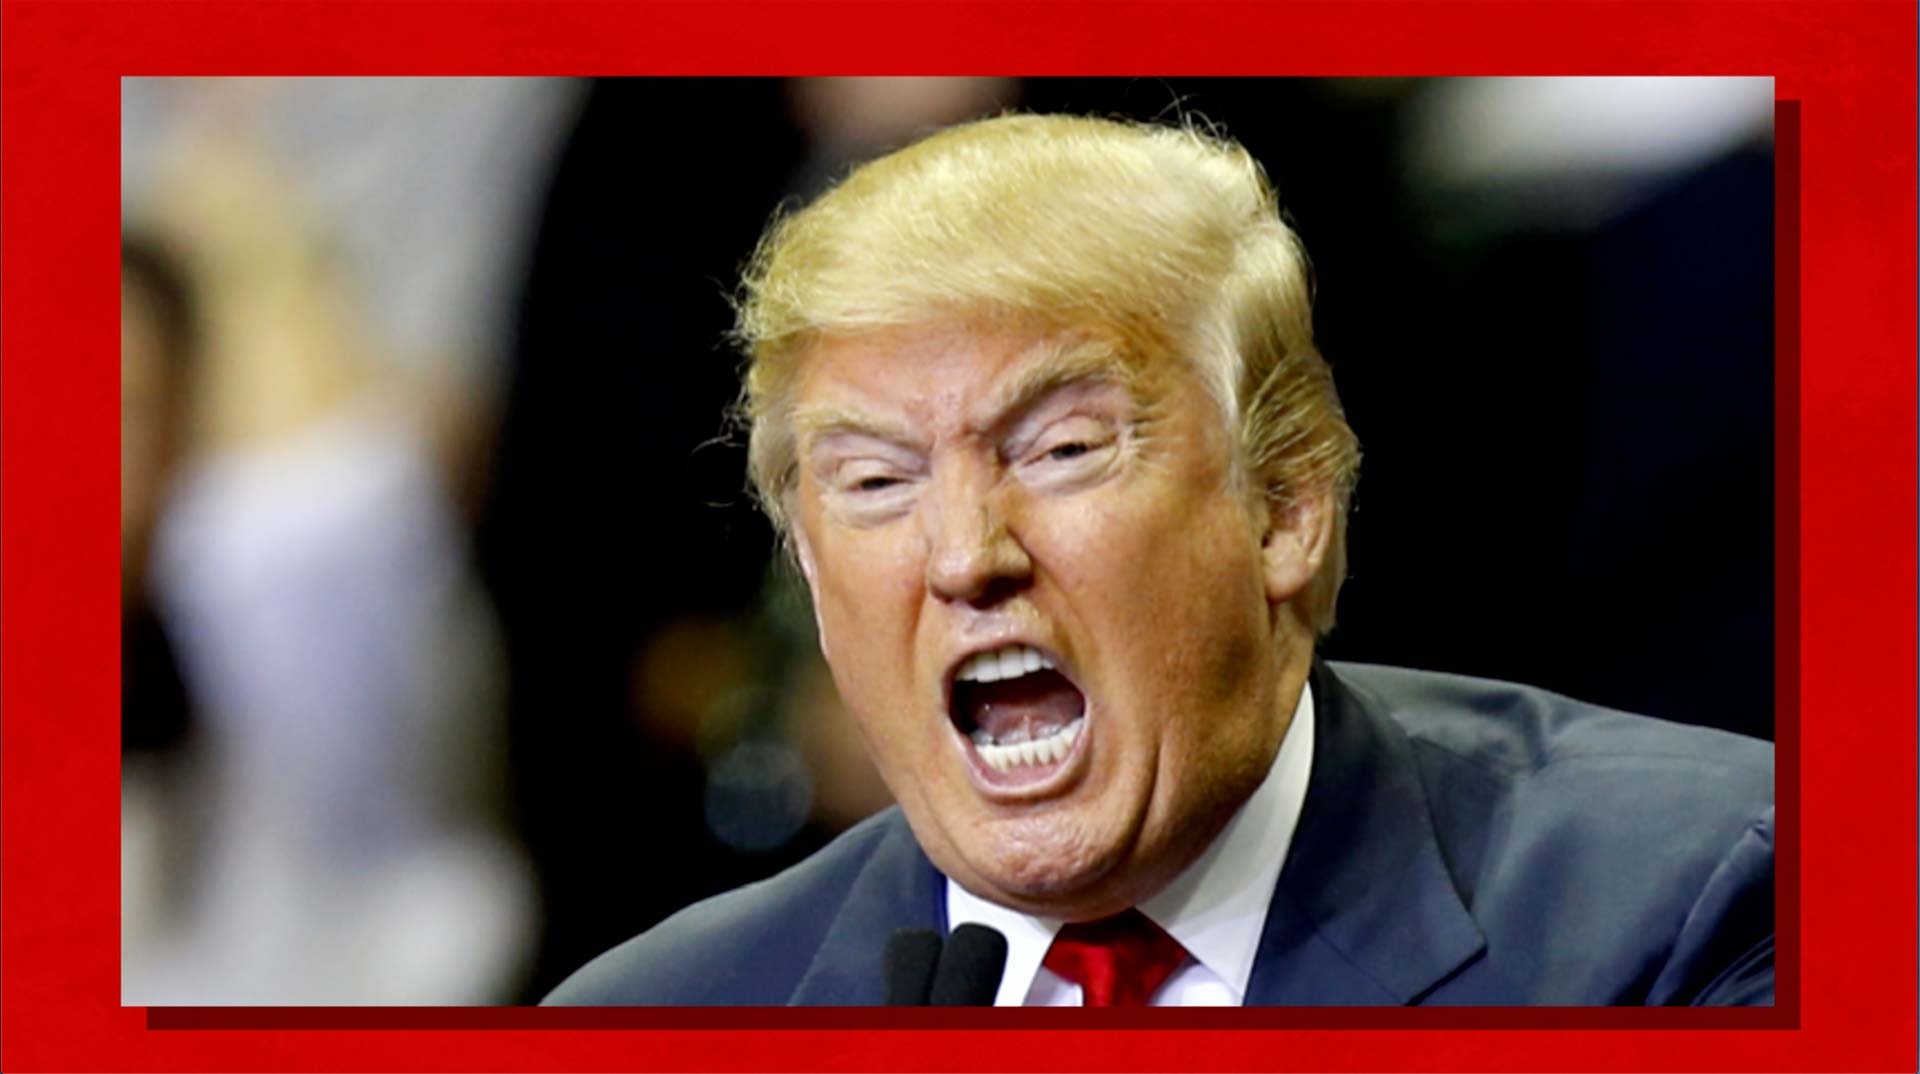 #UNFIT: The Psychology of Donald Trump